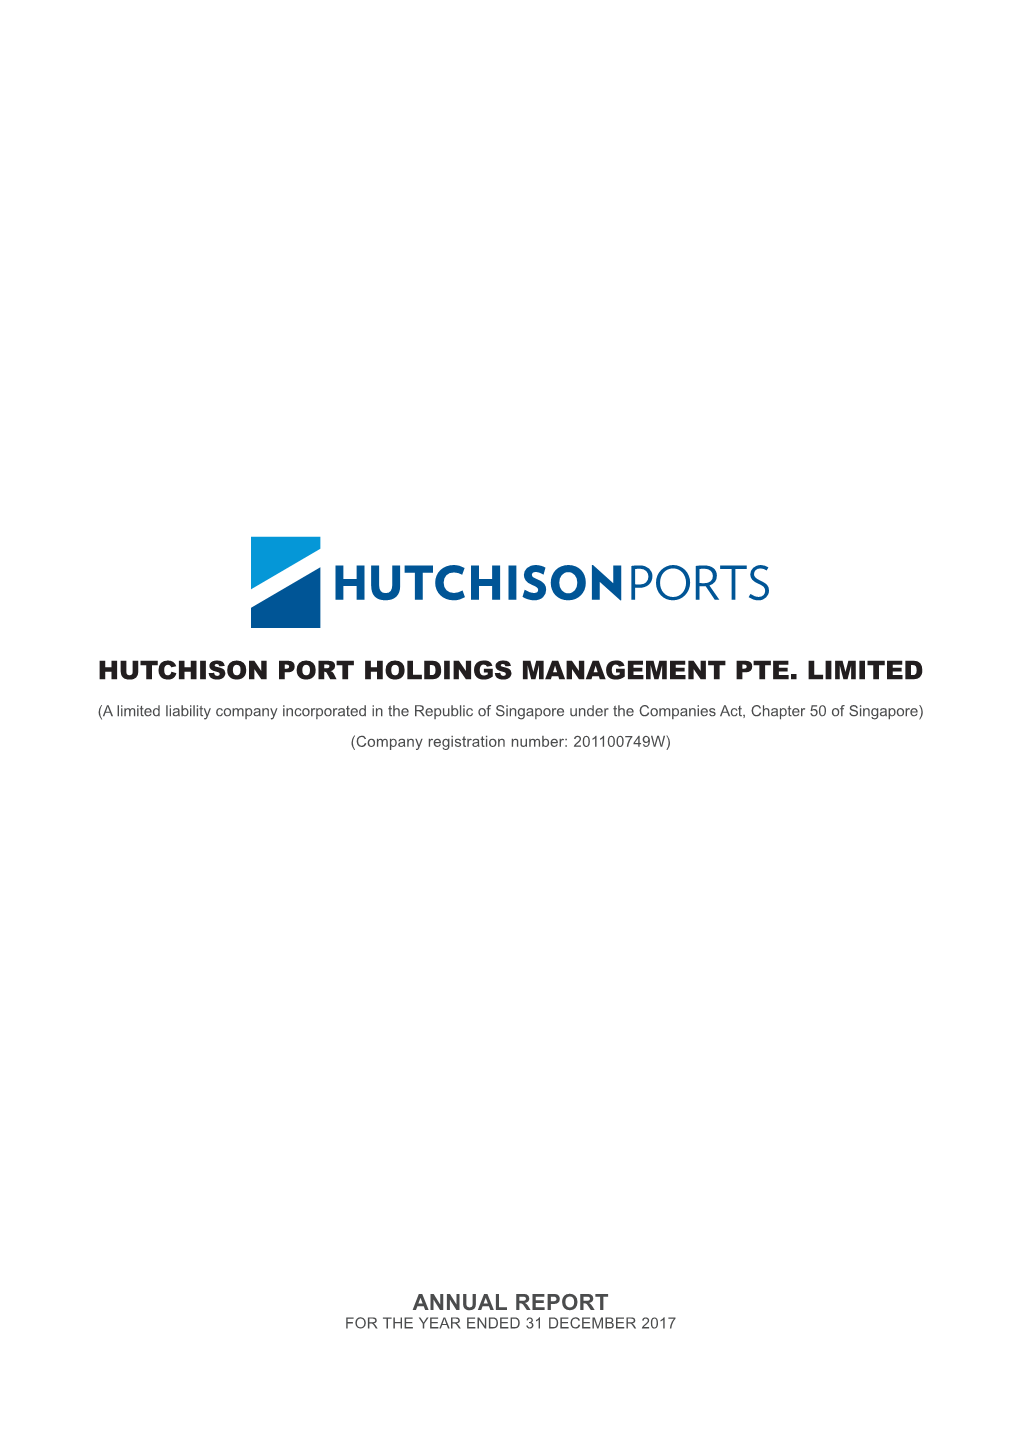 Hutchison Port Holdings Management Pte. Limited